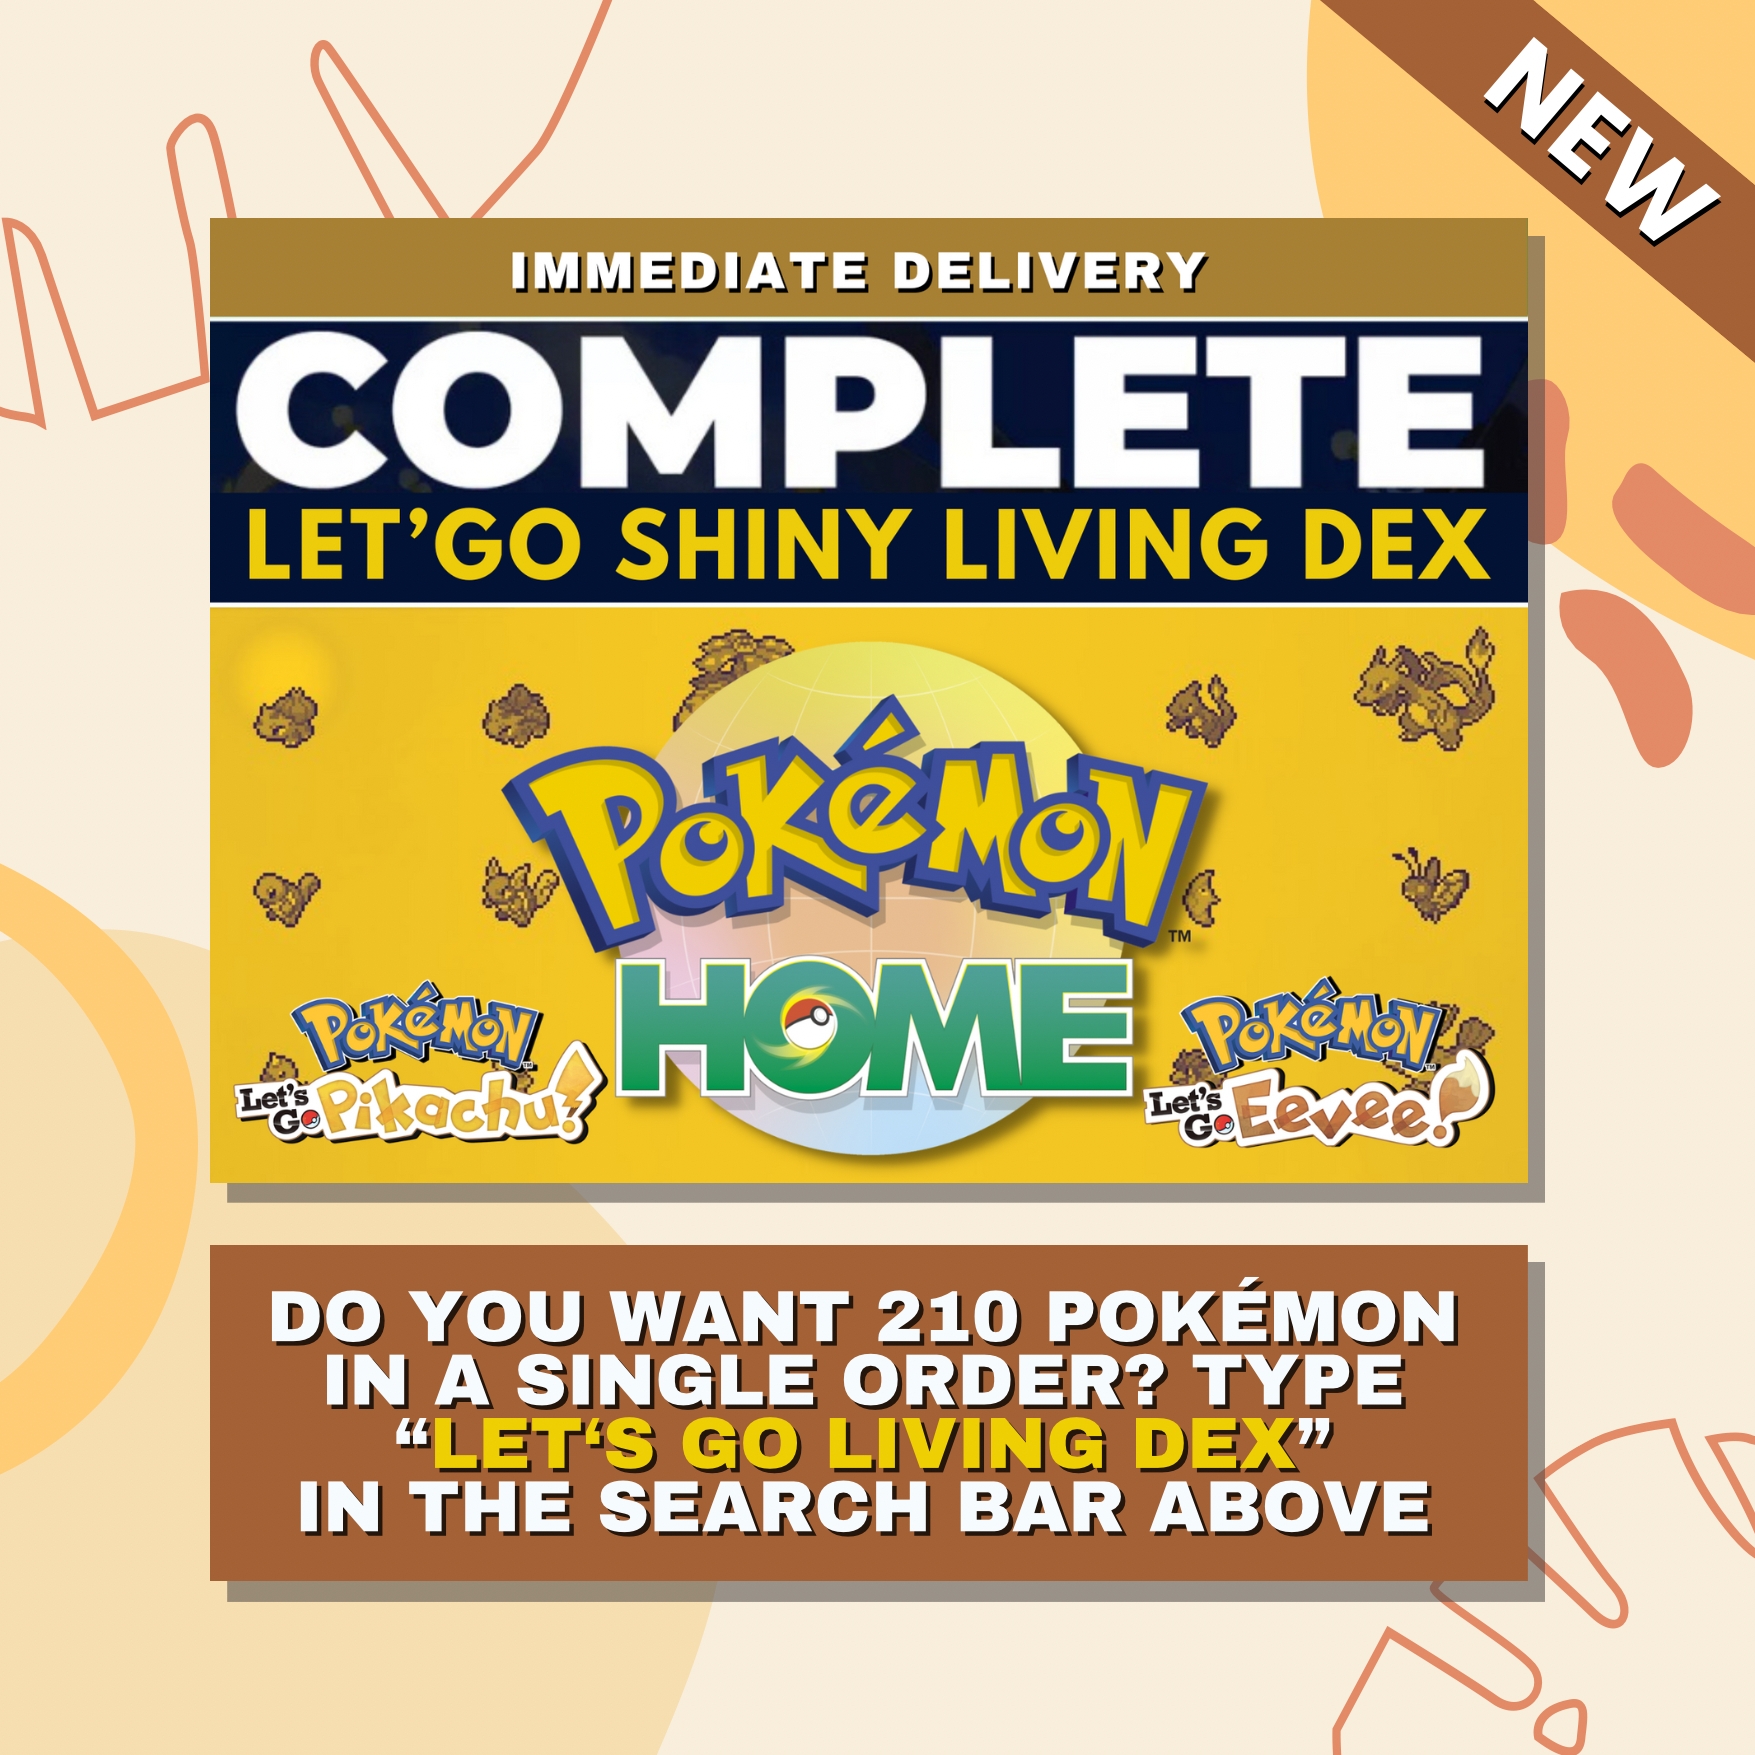 Dratini Shiny ✨ or Non Shiny Pokémon Let's Go Pikachu Eevee Level 1 Legit 6 IV 100% Legal from GO Park Customizable Custom OT by Shiny Living Dex | Shiny Living Dex